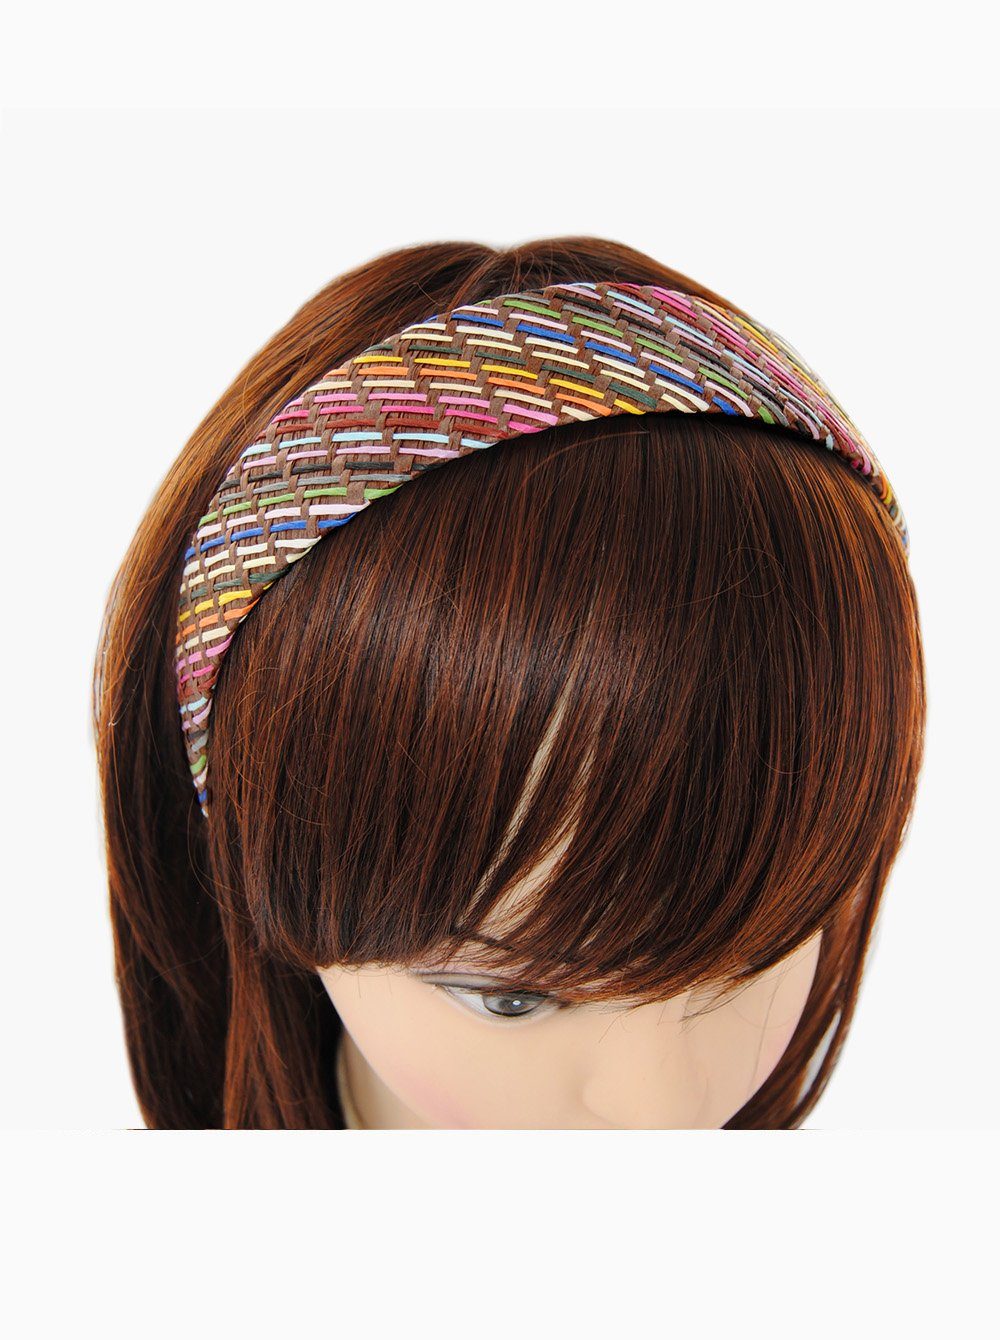 Damen Schmuck axy Haarreif Breiter Haarreif in Bast-Optik mit geflochtener Oberfläche, Sommerlich Damen Haareifen Haarband